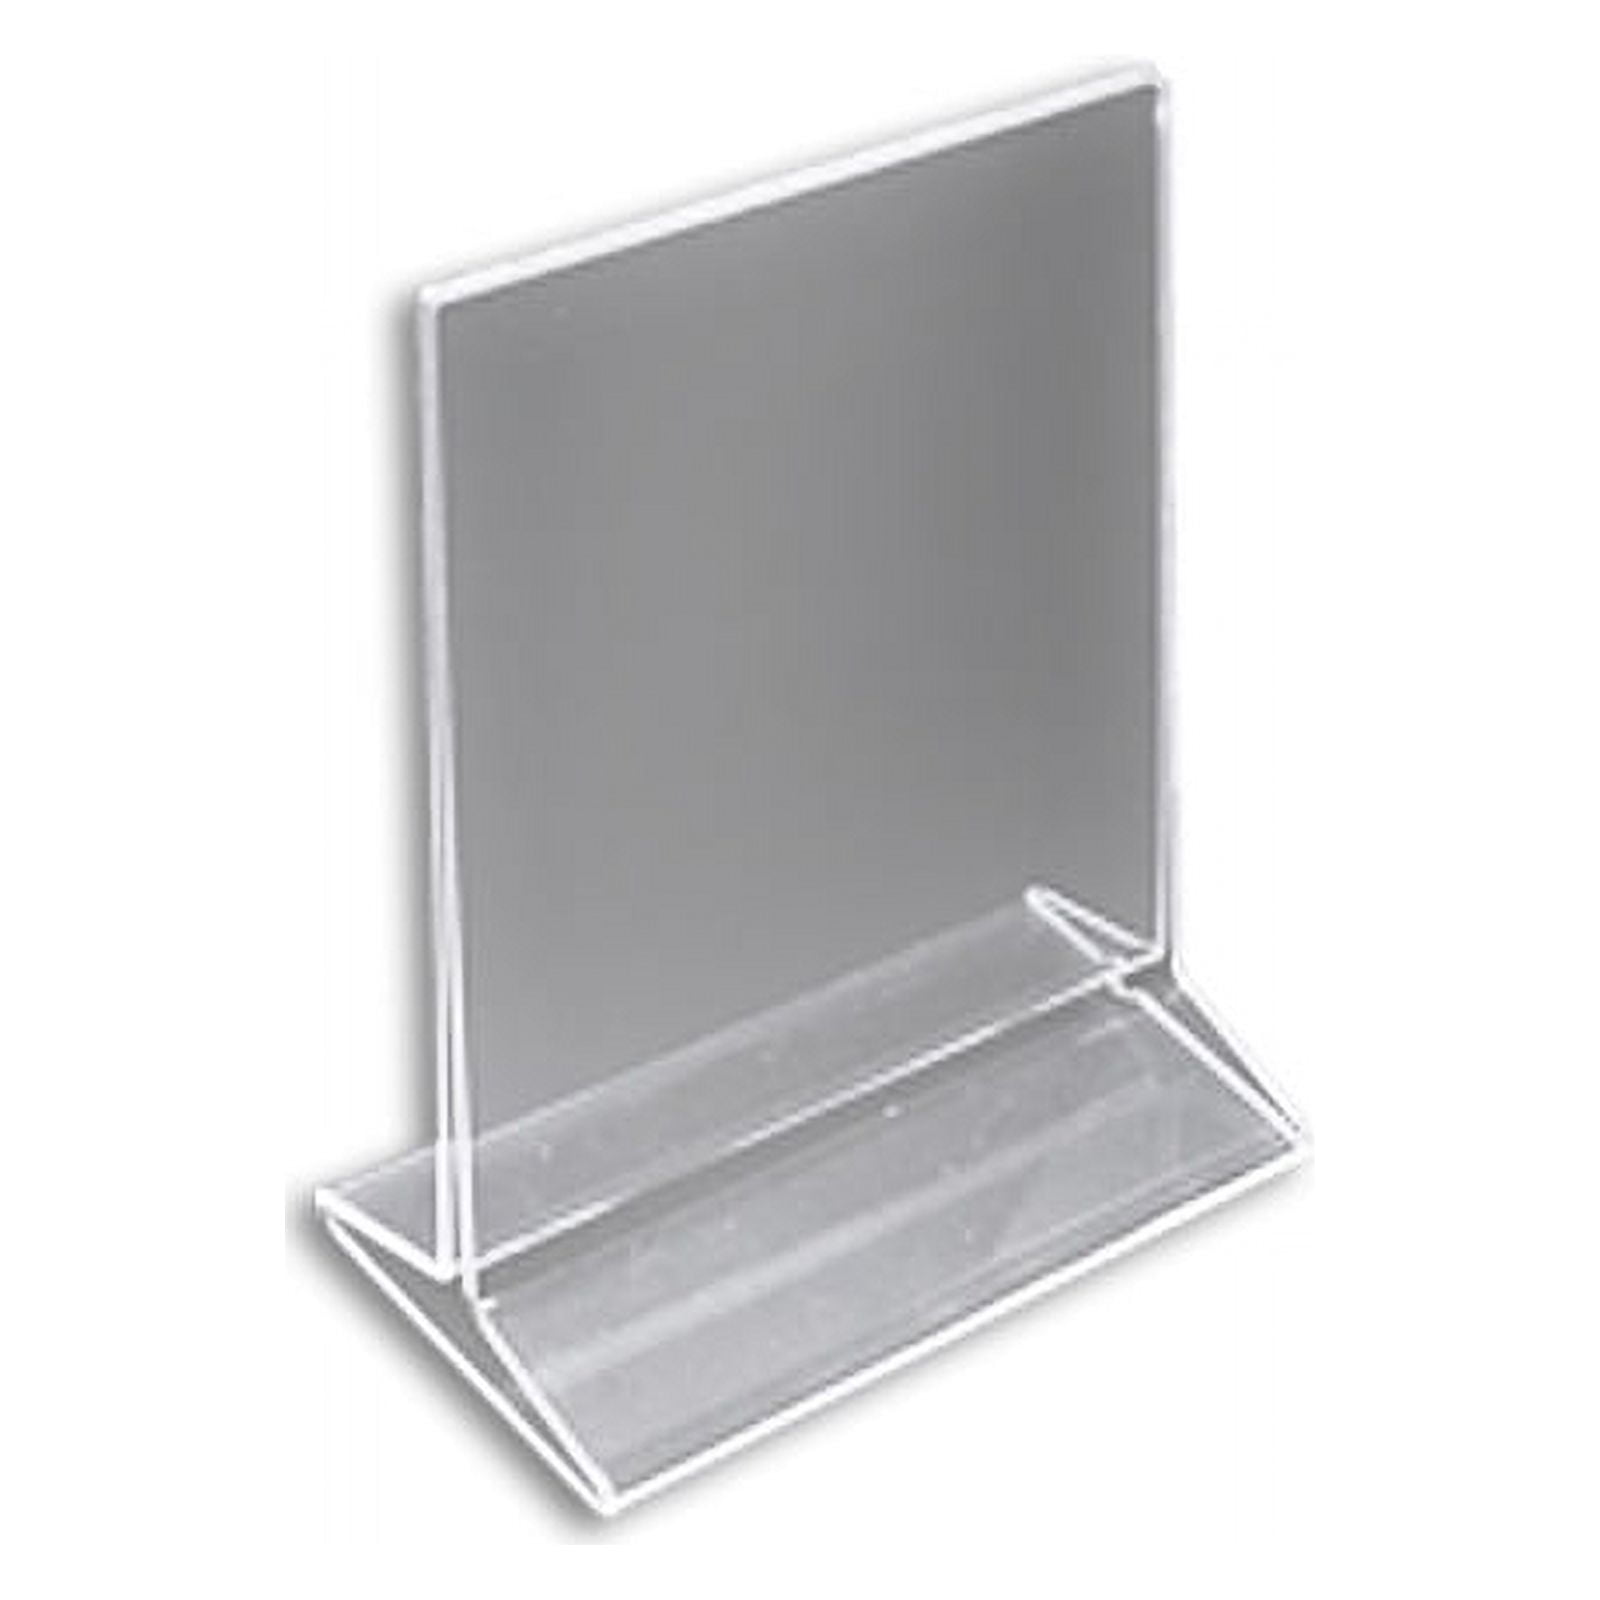 Azar Displays 142709 Top Loading Clear Acrylic T-Frame Sign Holder 5.5